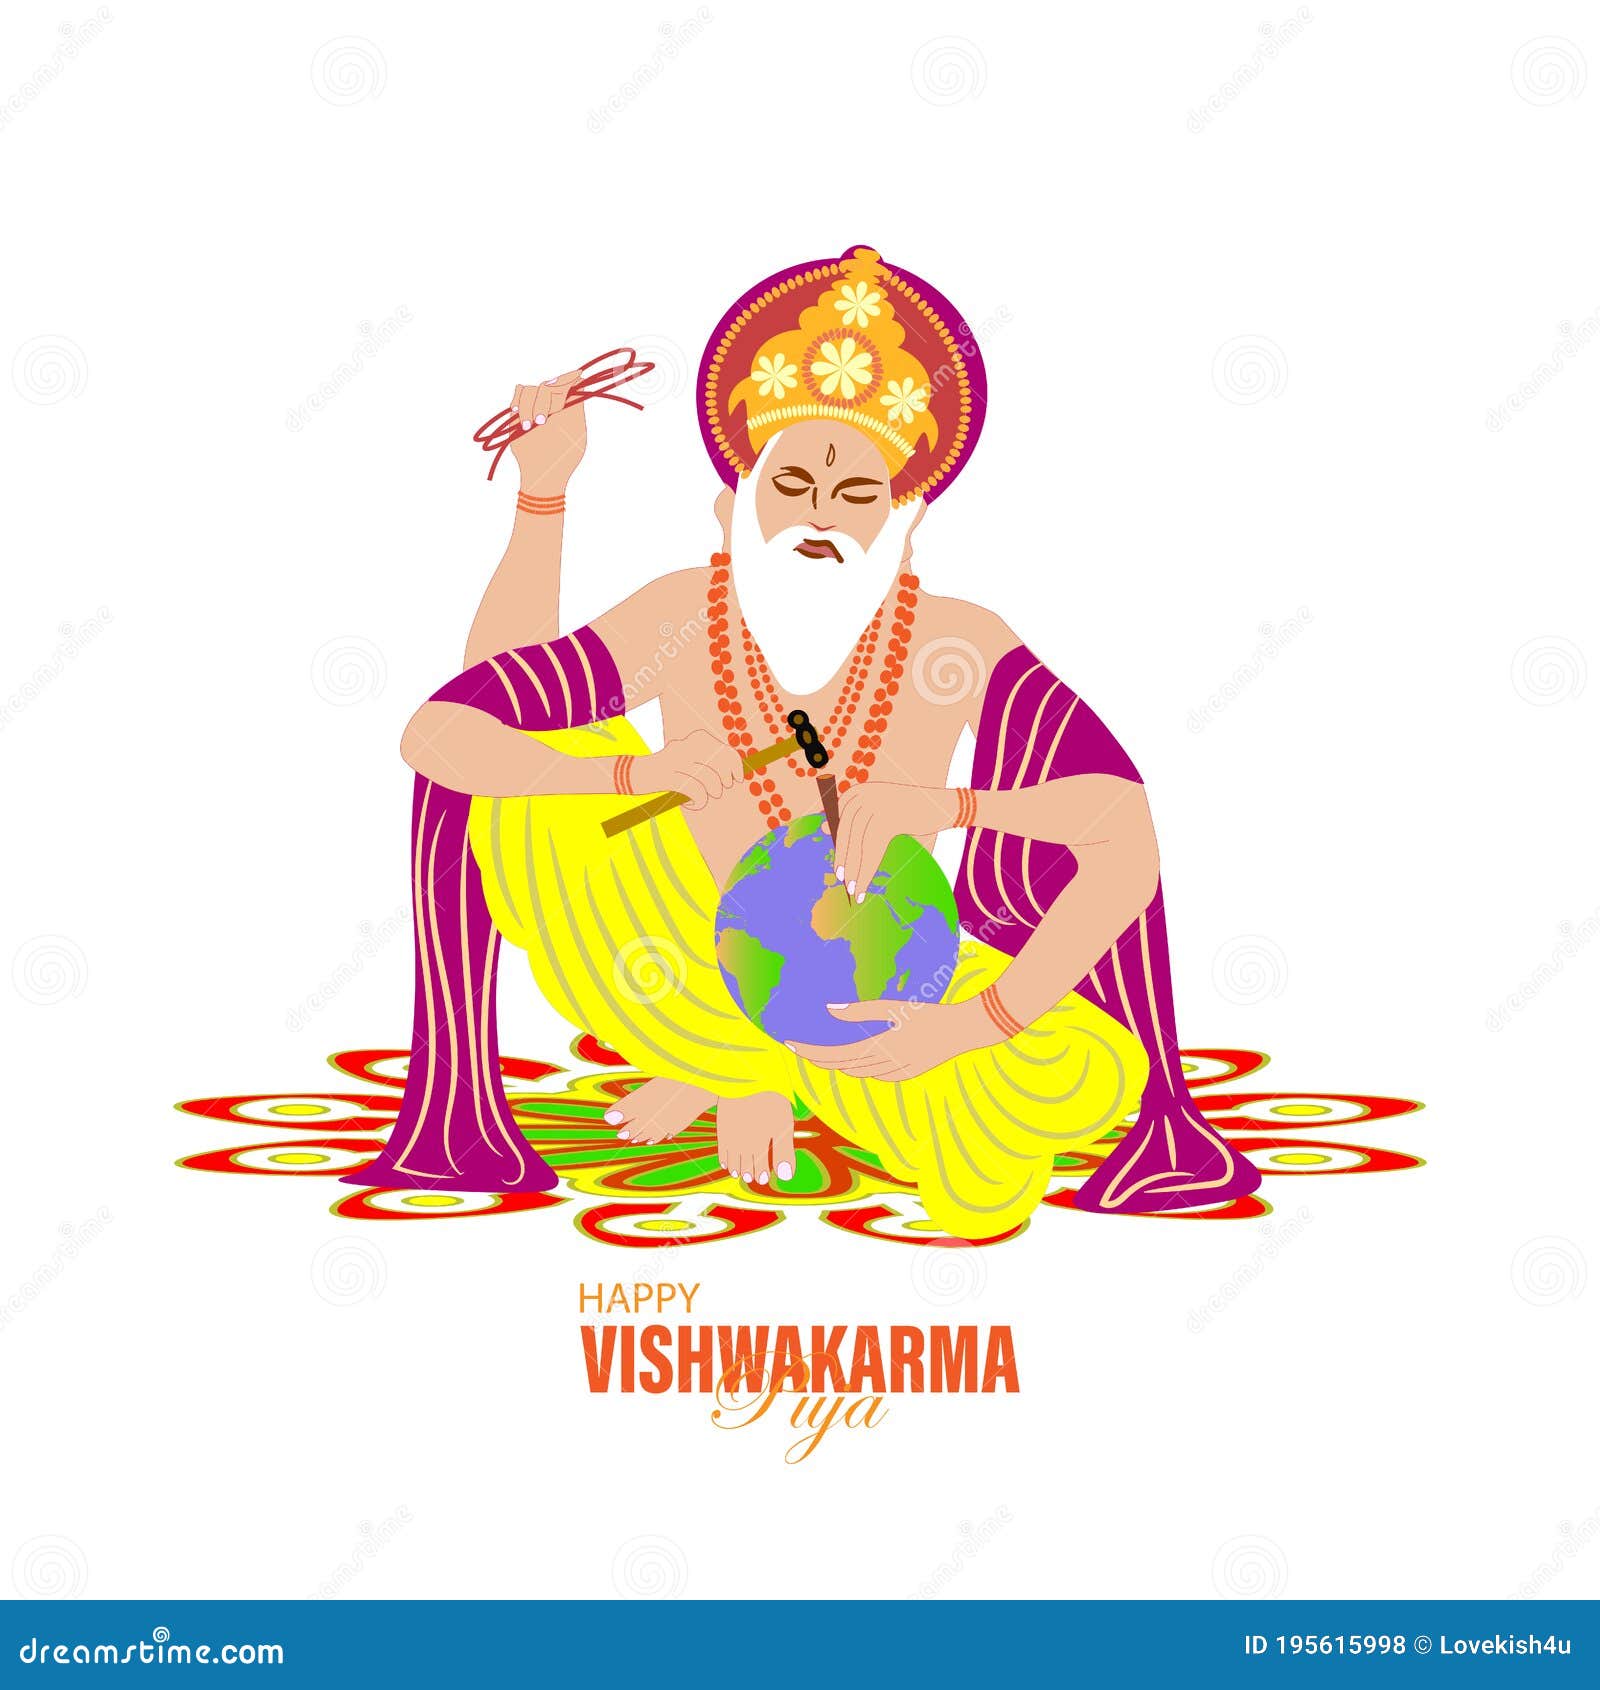 vishwakarma puja - 4 Free Vectors to Download | FreeVectors